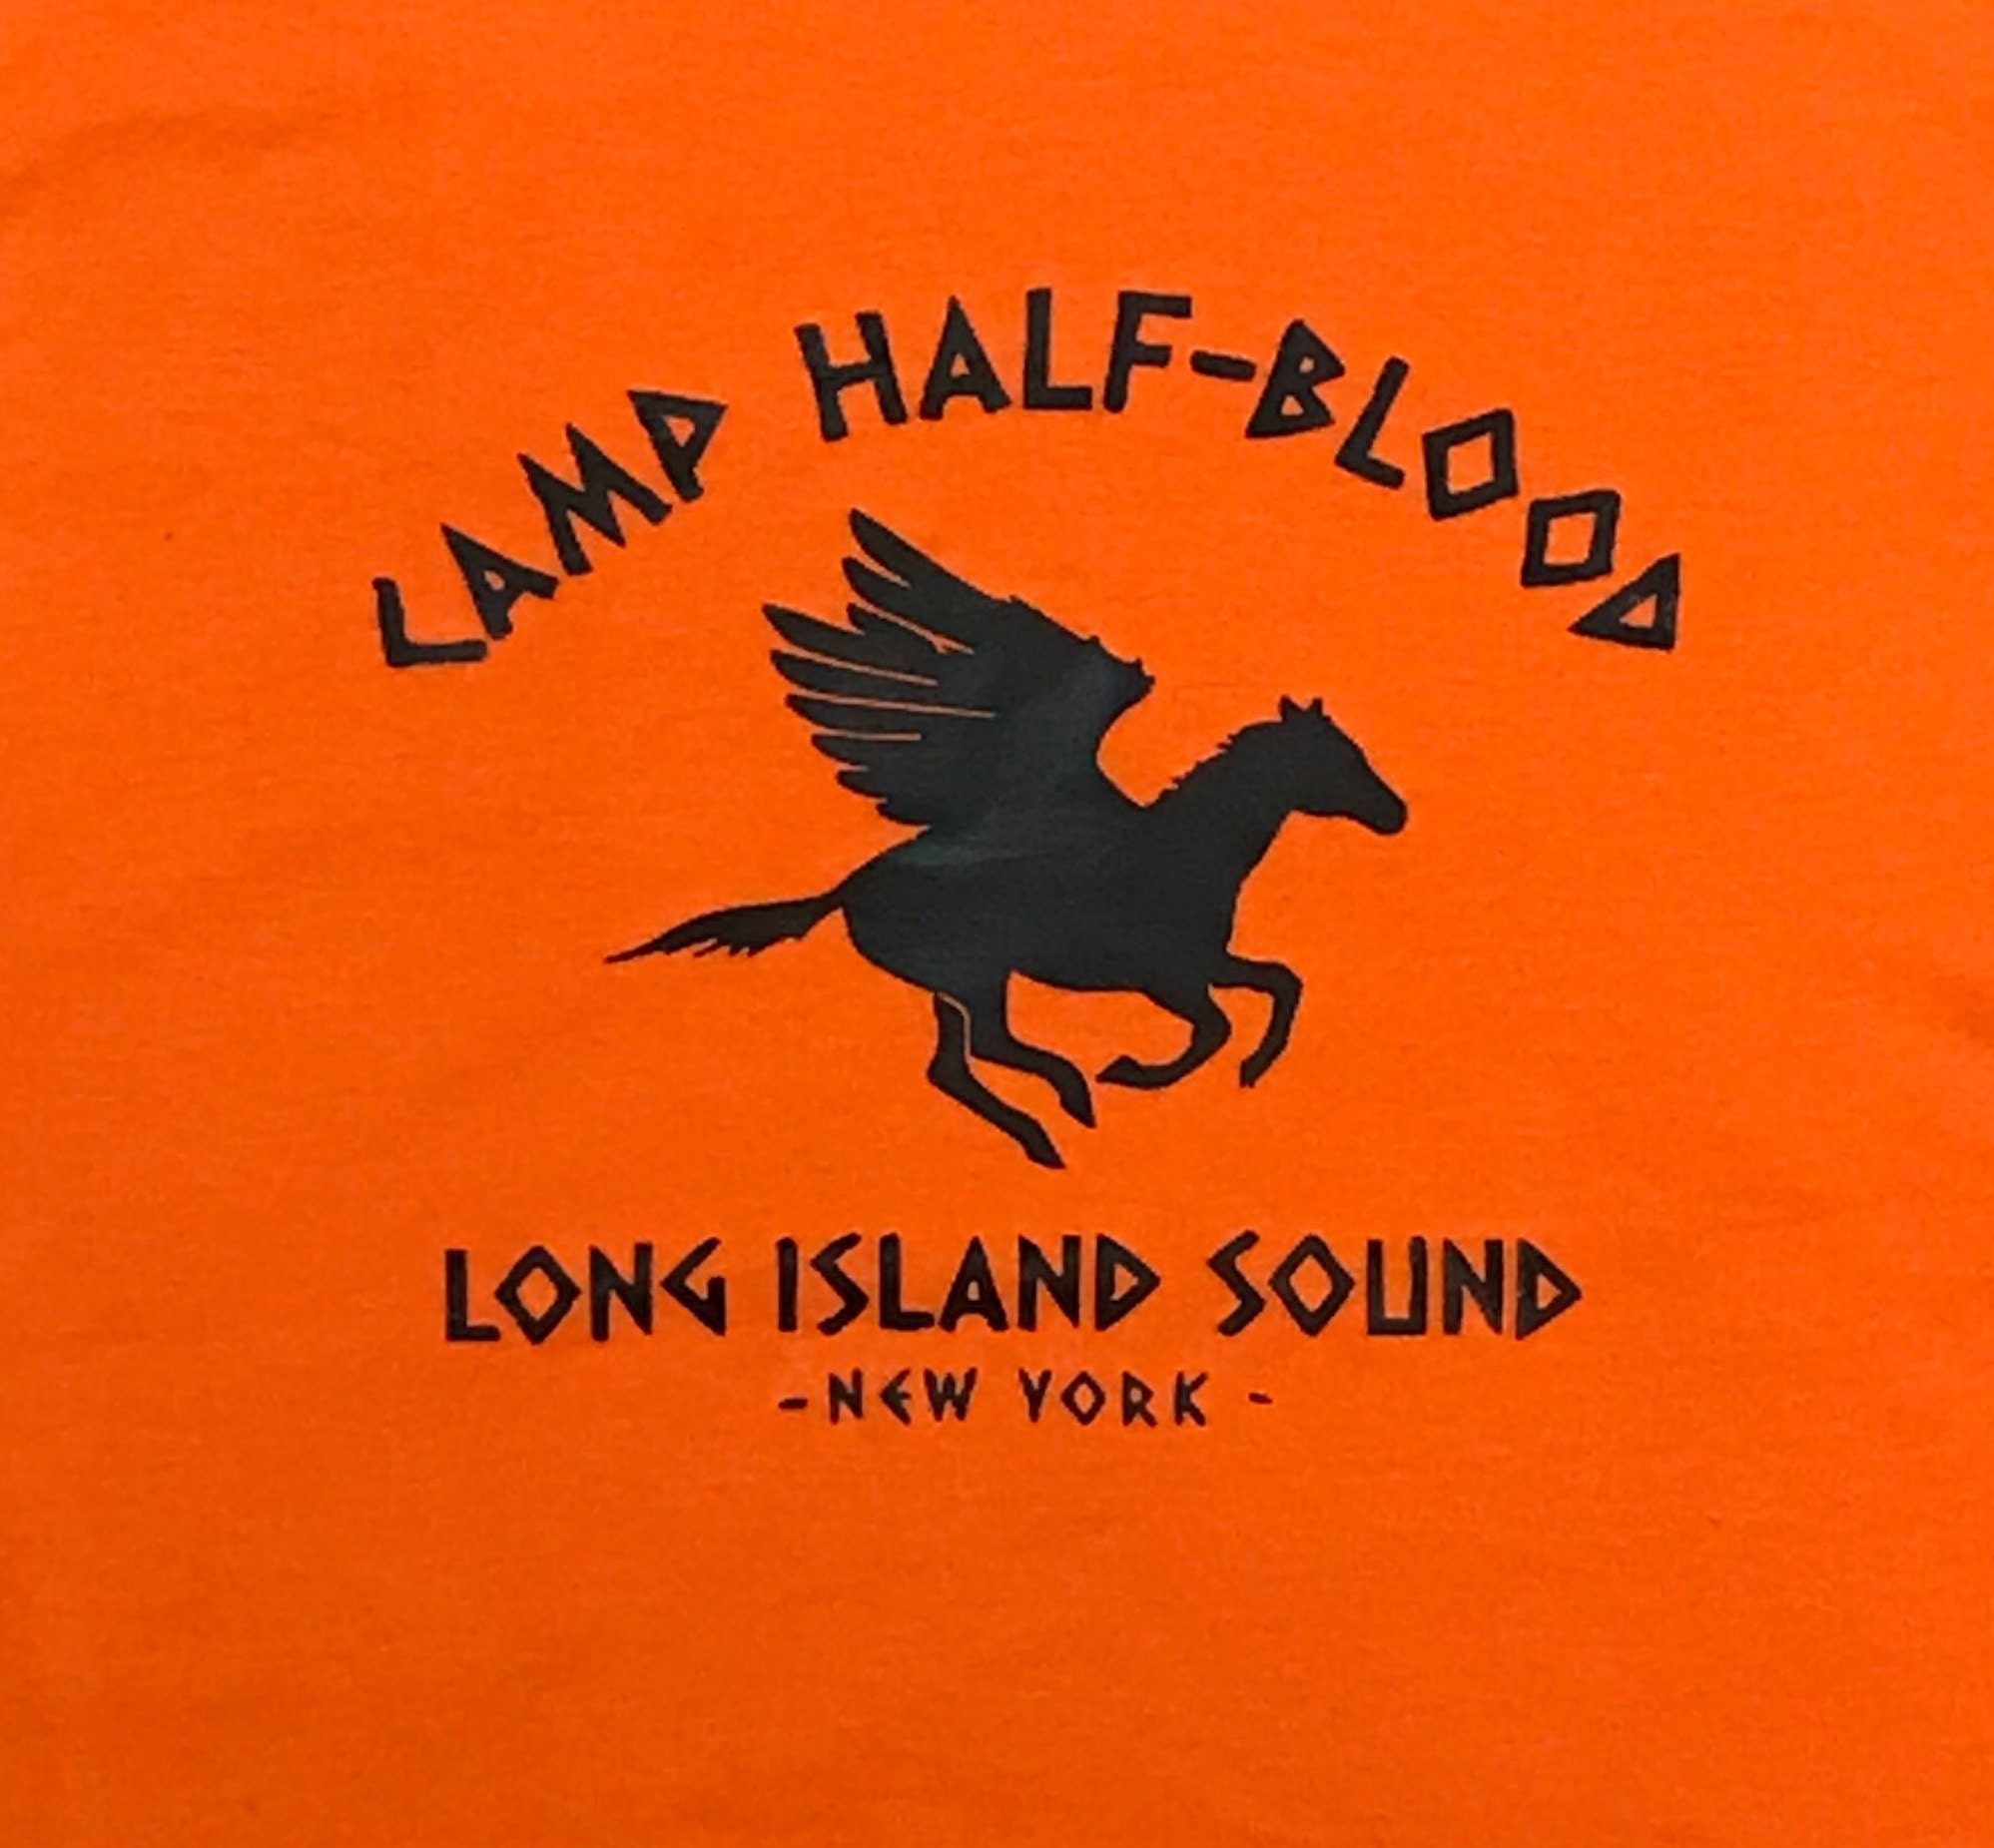 Camiseta Camp Half Blood Percy Jackson